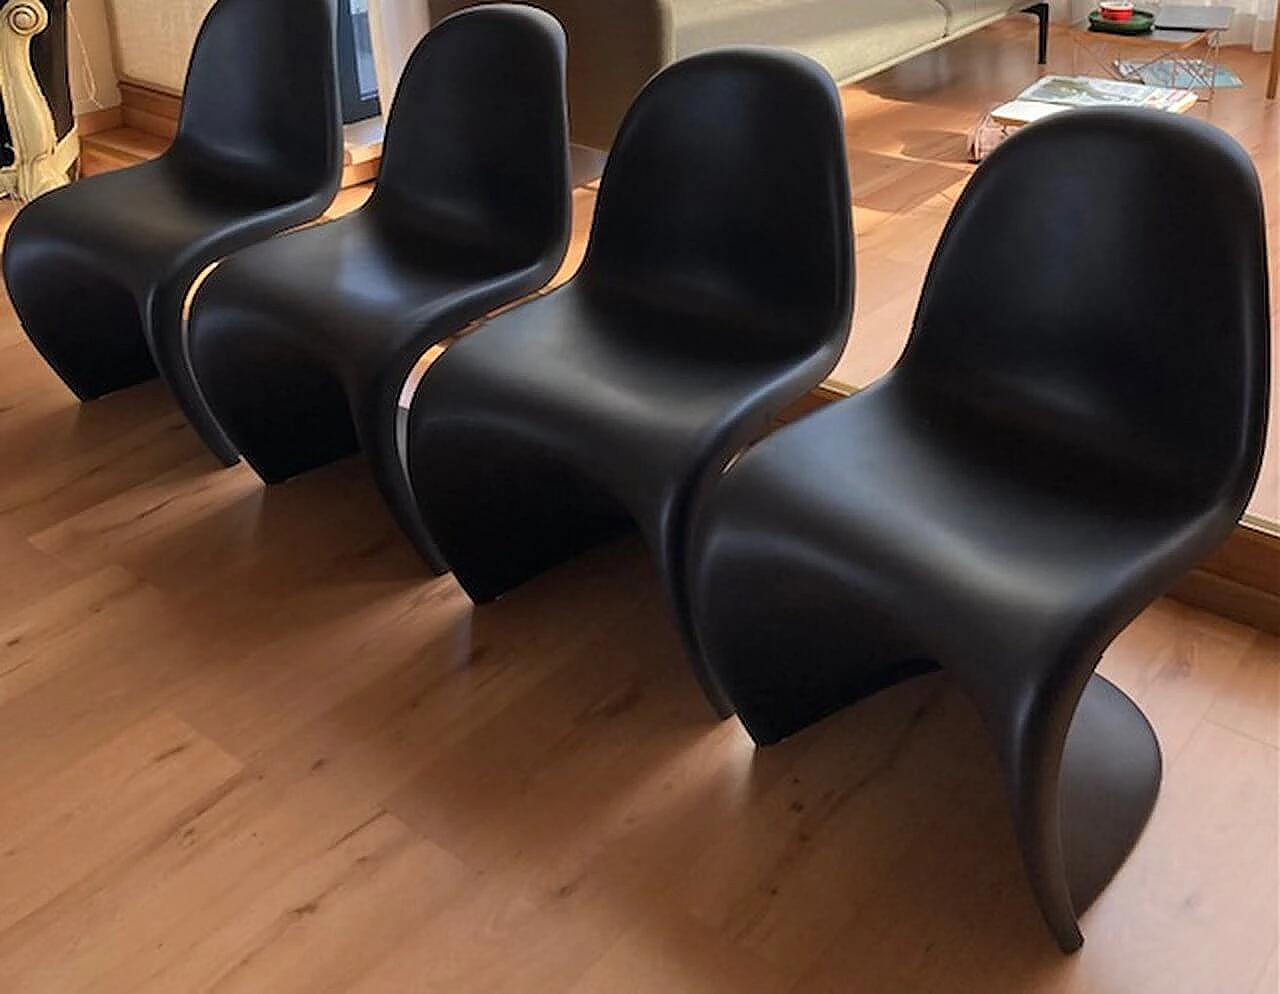 4 Black Panton S chairs by Verner Panton for Vitra 1